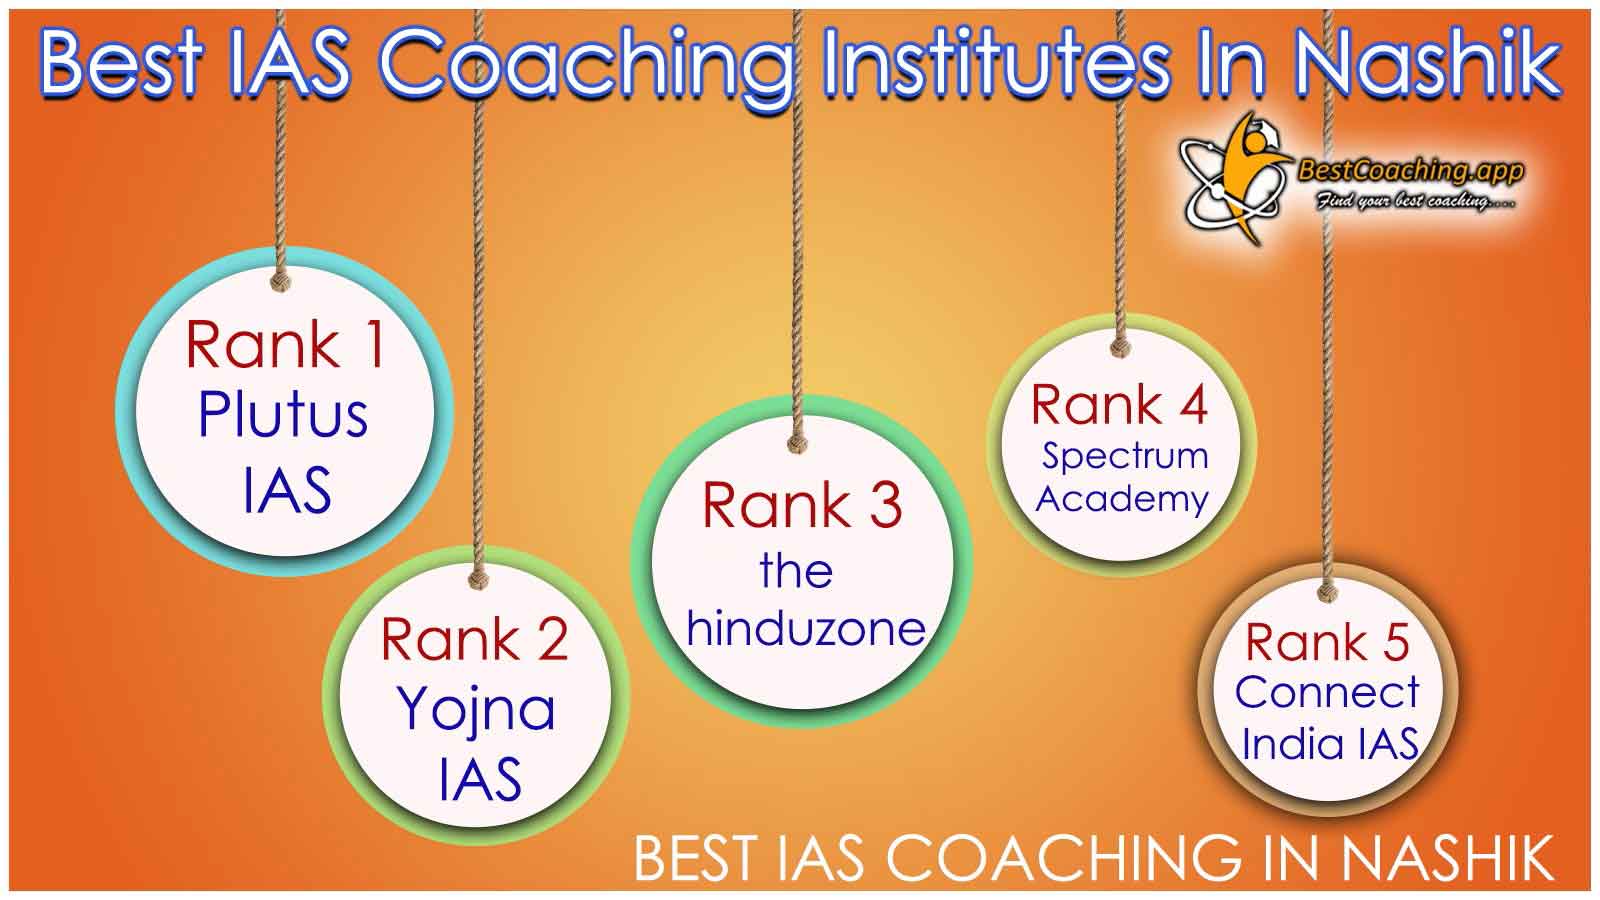 Best IAS Coaching in Nashik